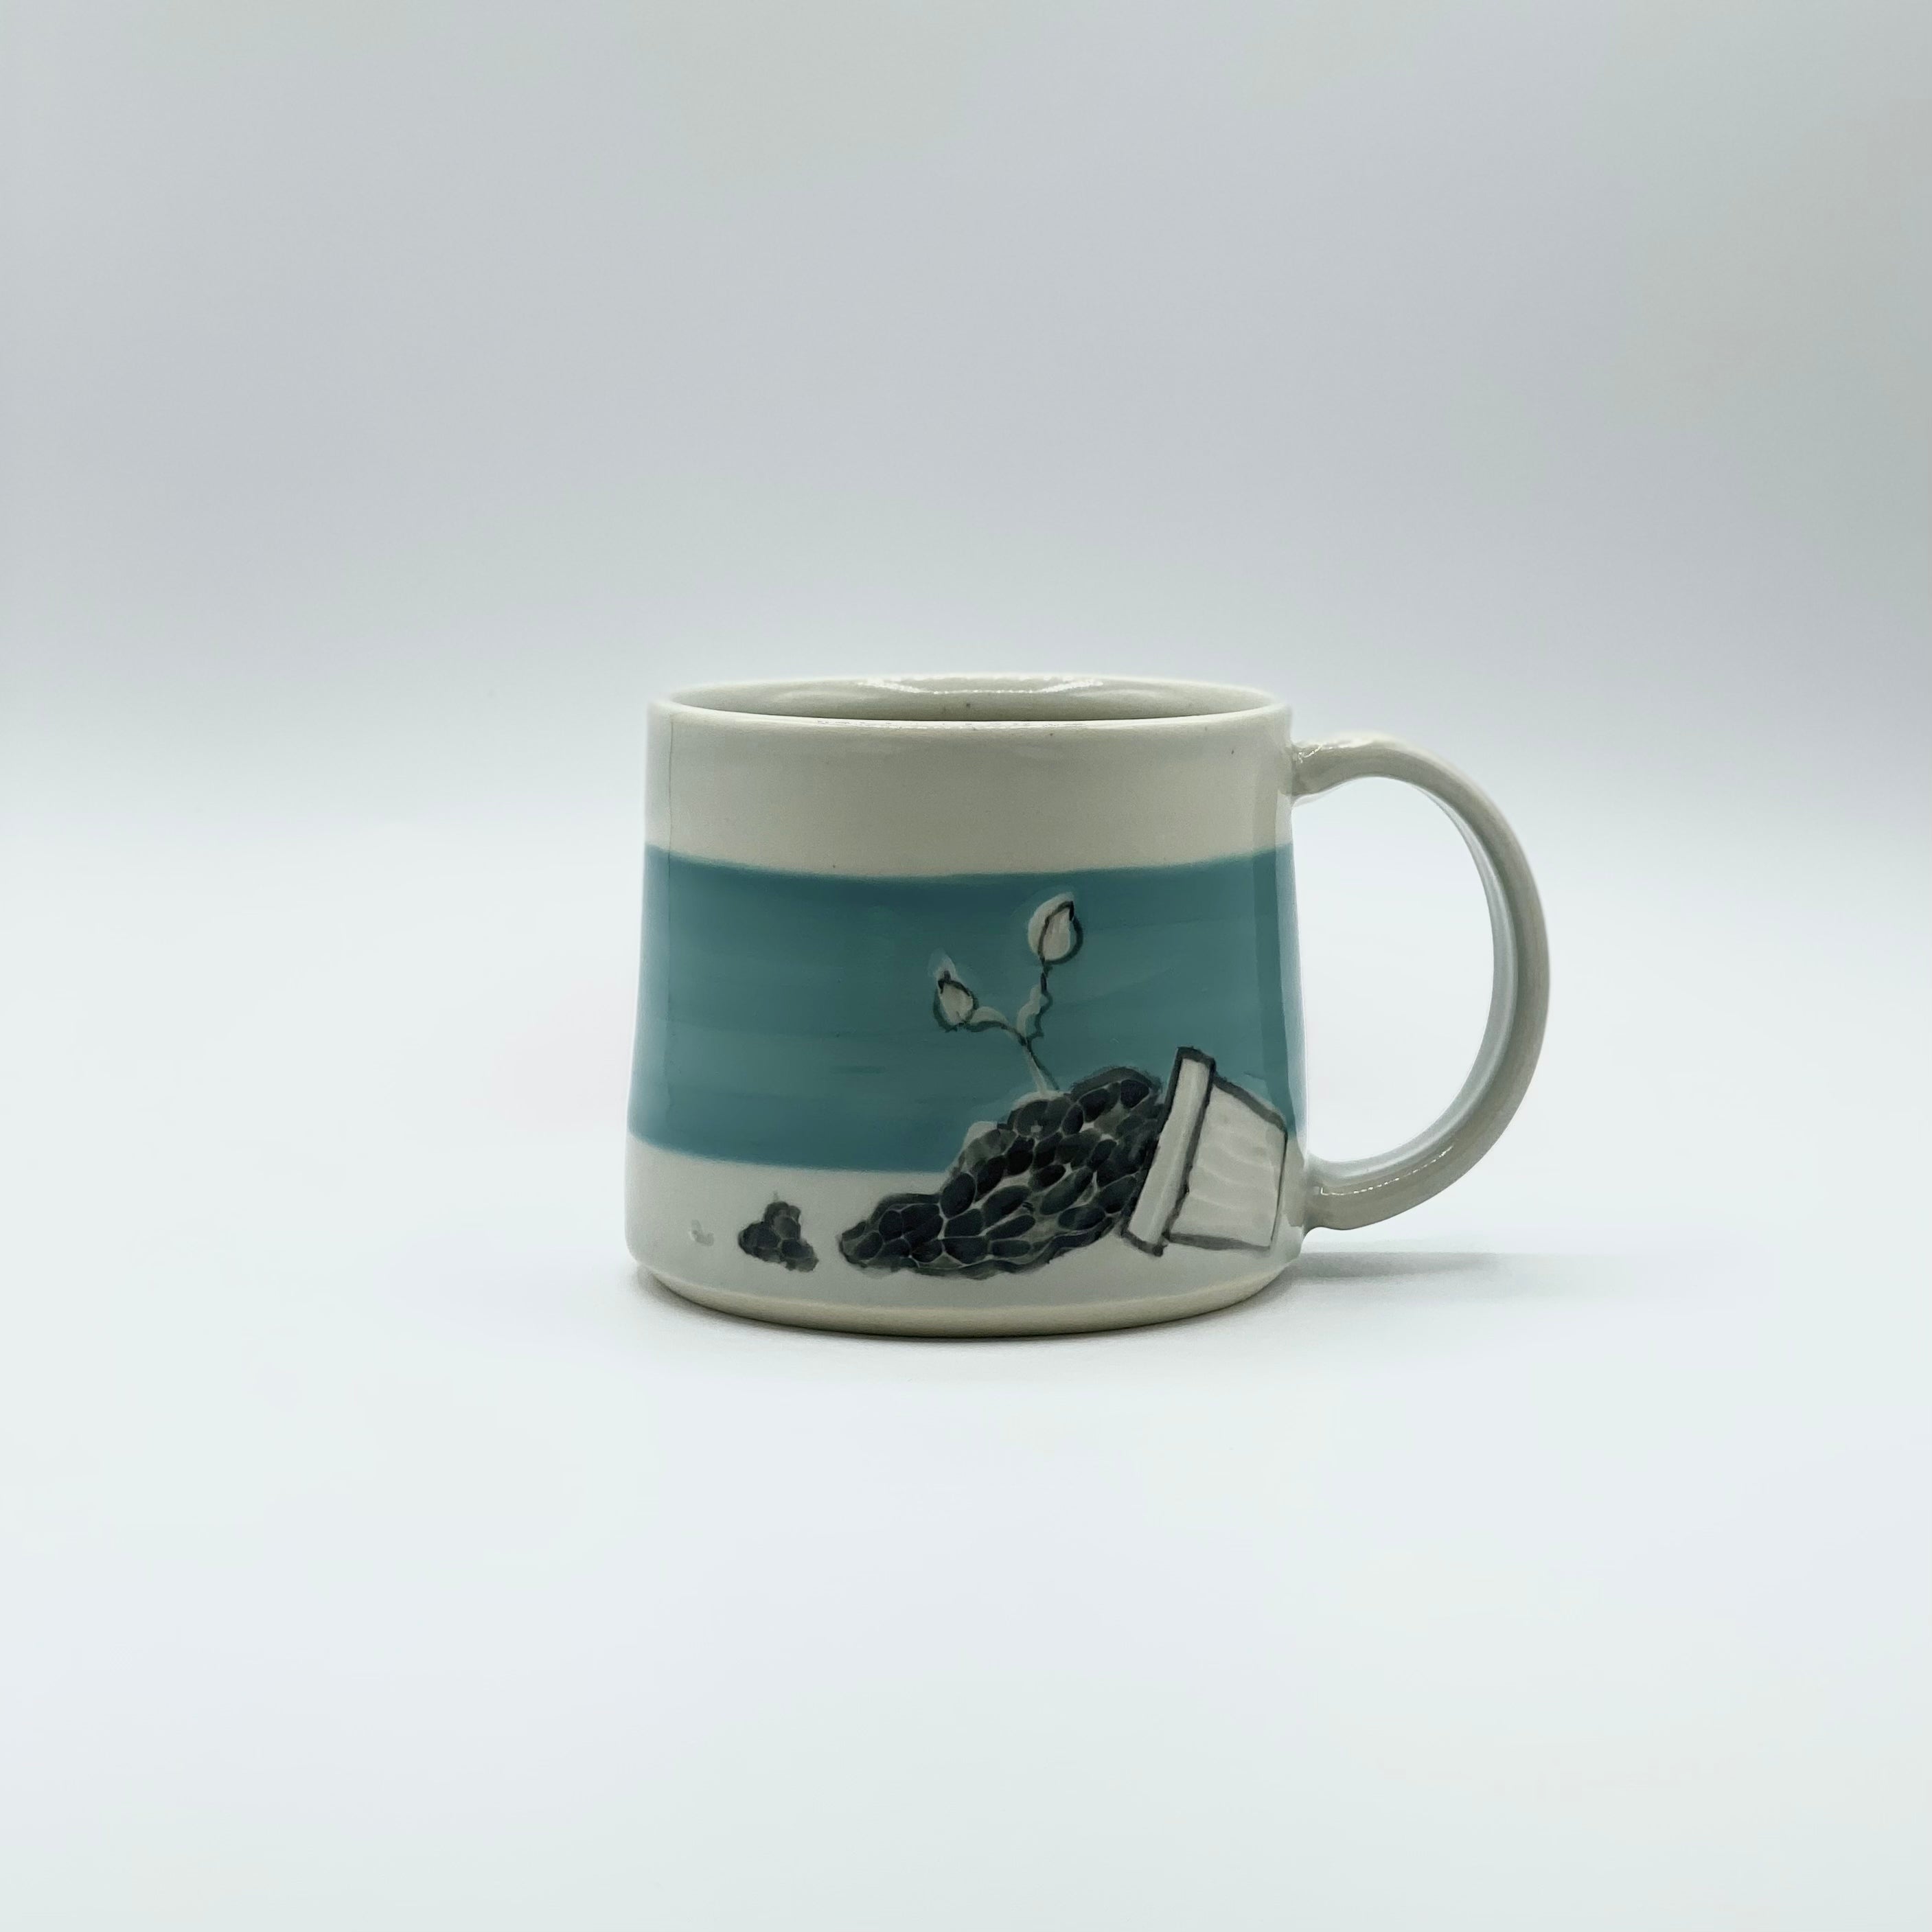 “Grow With Me” Mug by MacKinley Ceramics